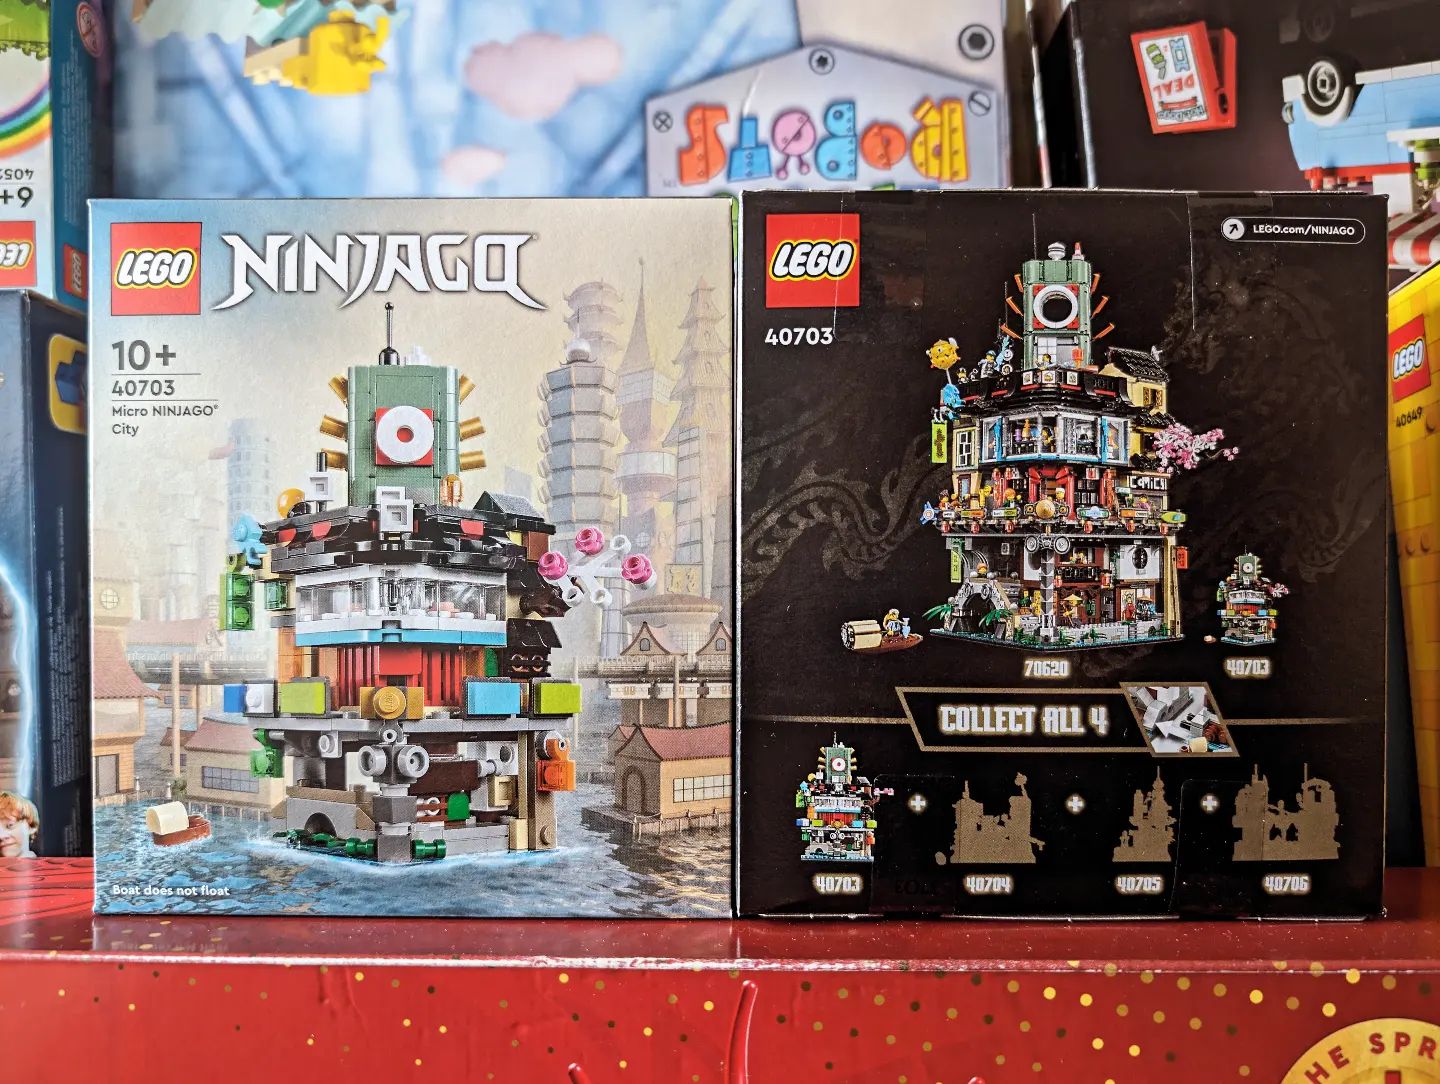 LEGO Ninjago Micro Sets Looks to be Insider Rewards - The Brick Fan